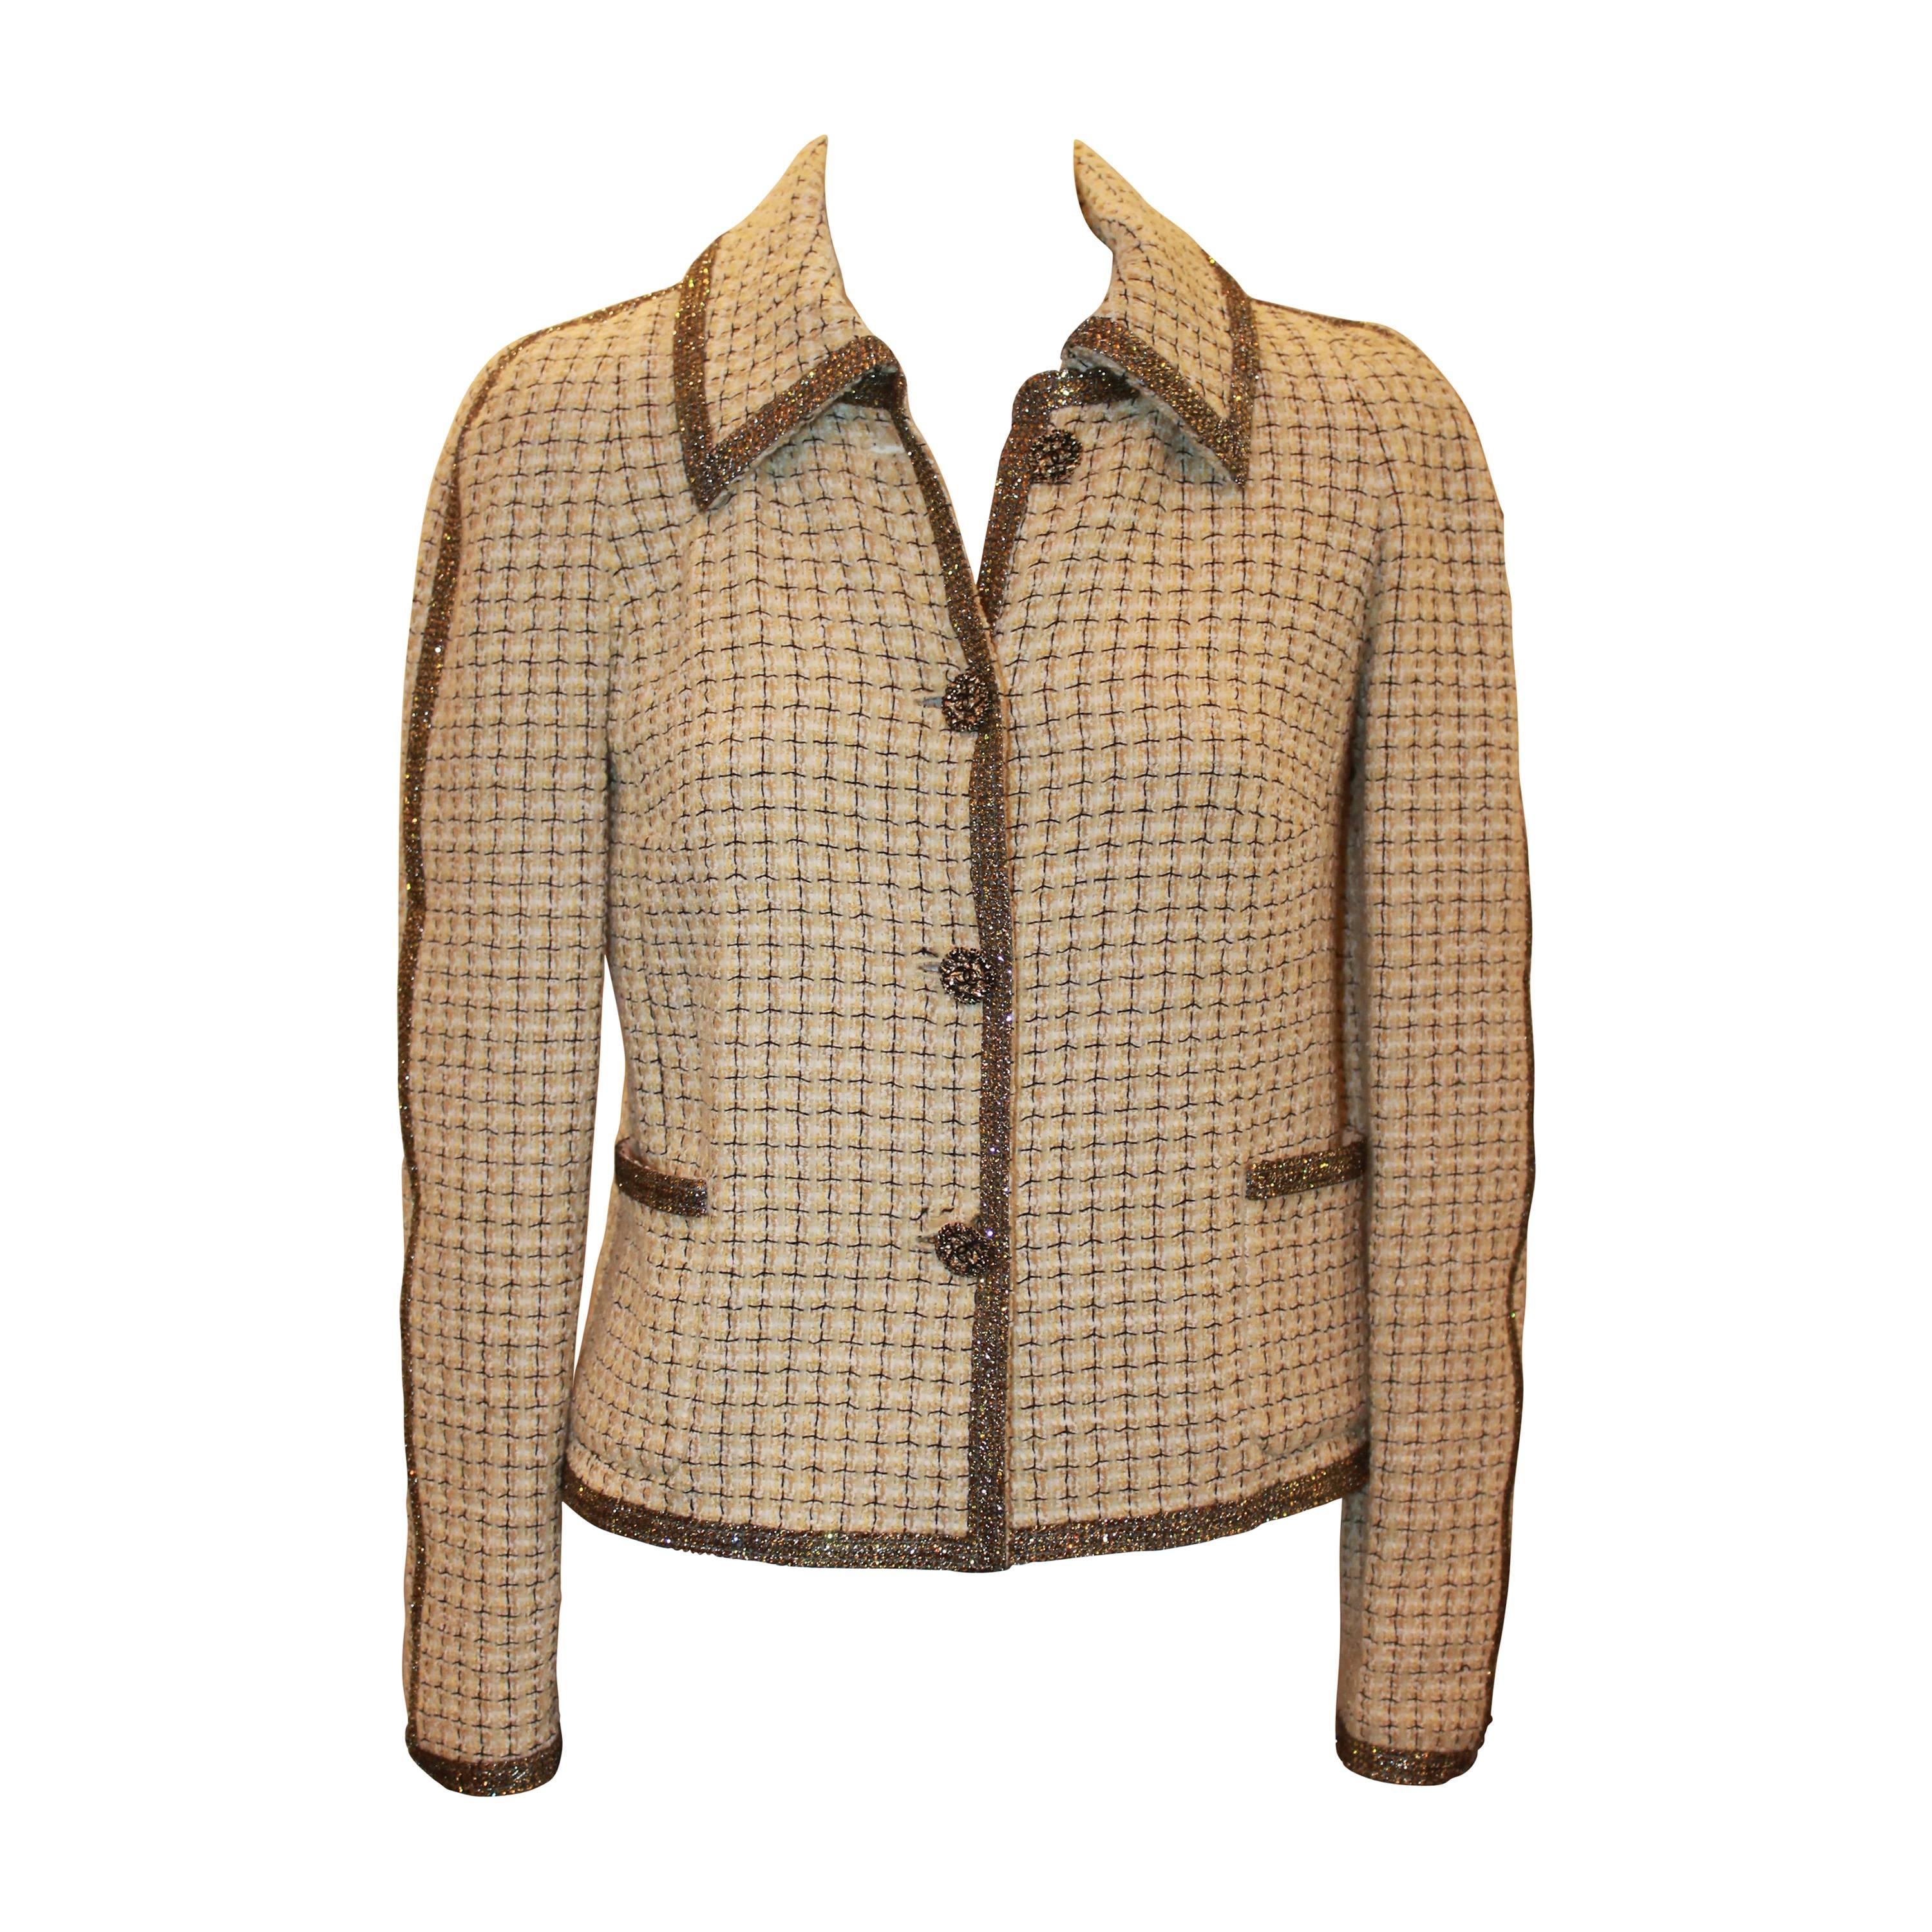 Chanel Ivory & Yellow Tweed Checkered Jacket w/ Topaz Colored Rhinestones - 36